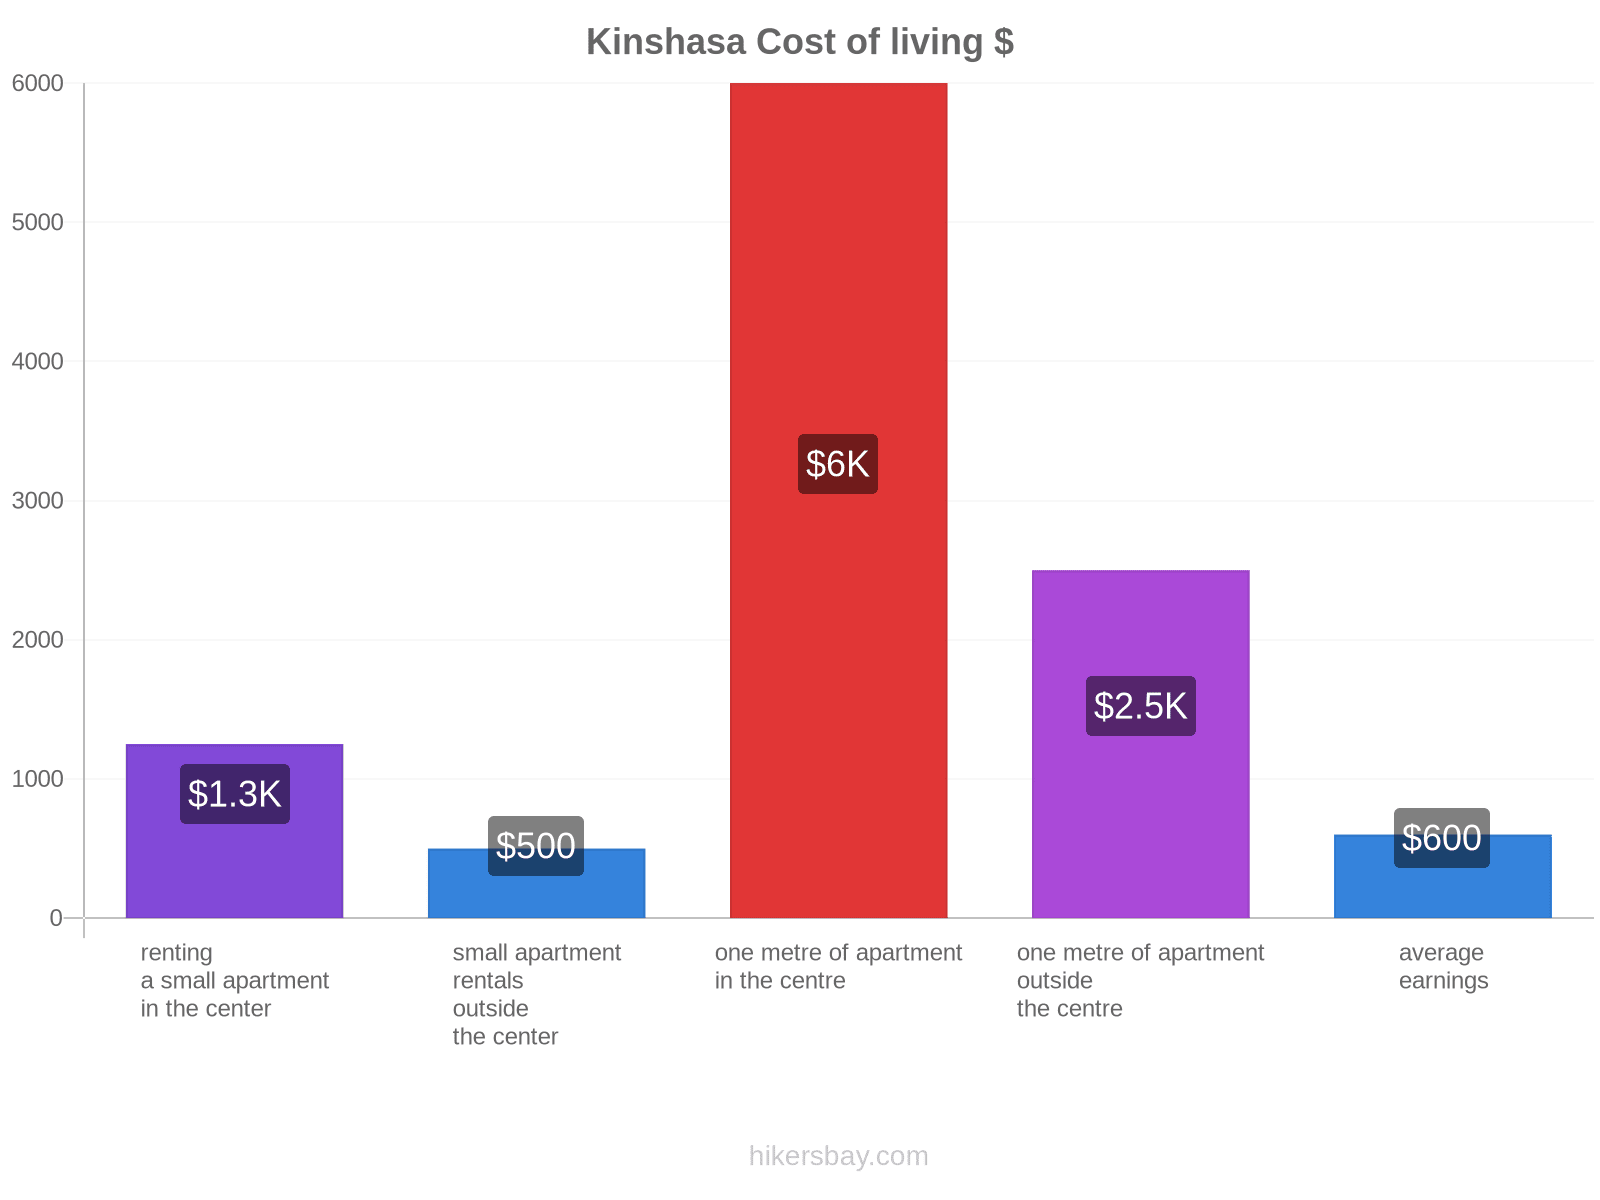 Kinshasa cost of living hikersbay.com